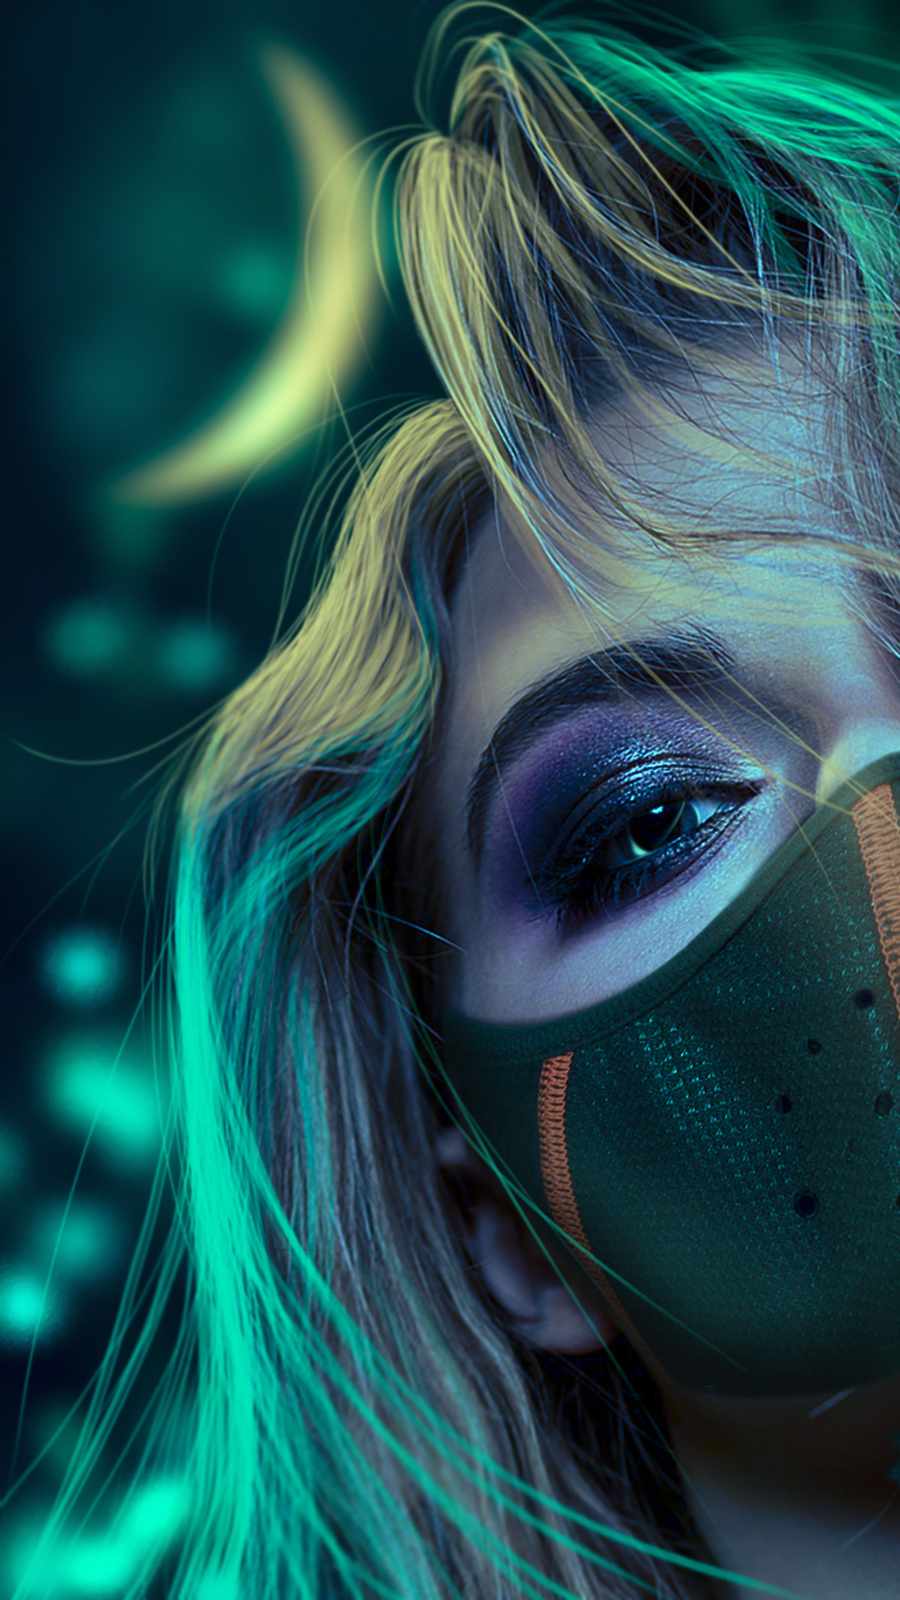 Mask Girl Eyes iPhone Wallpaper